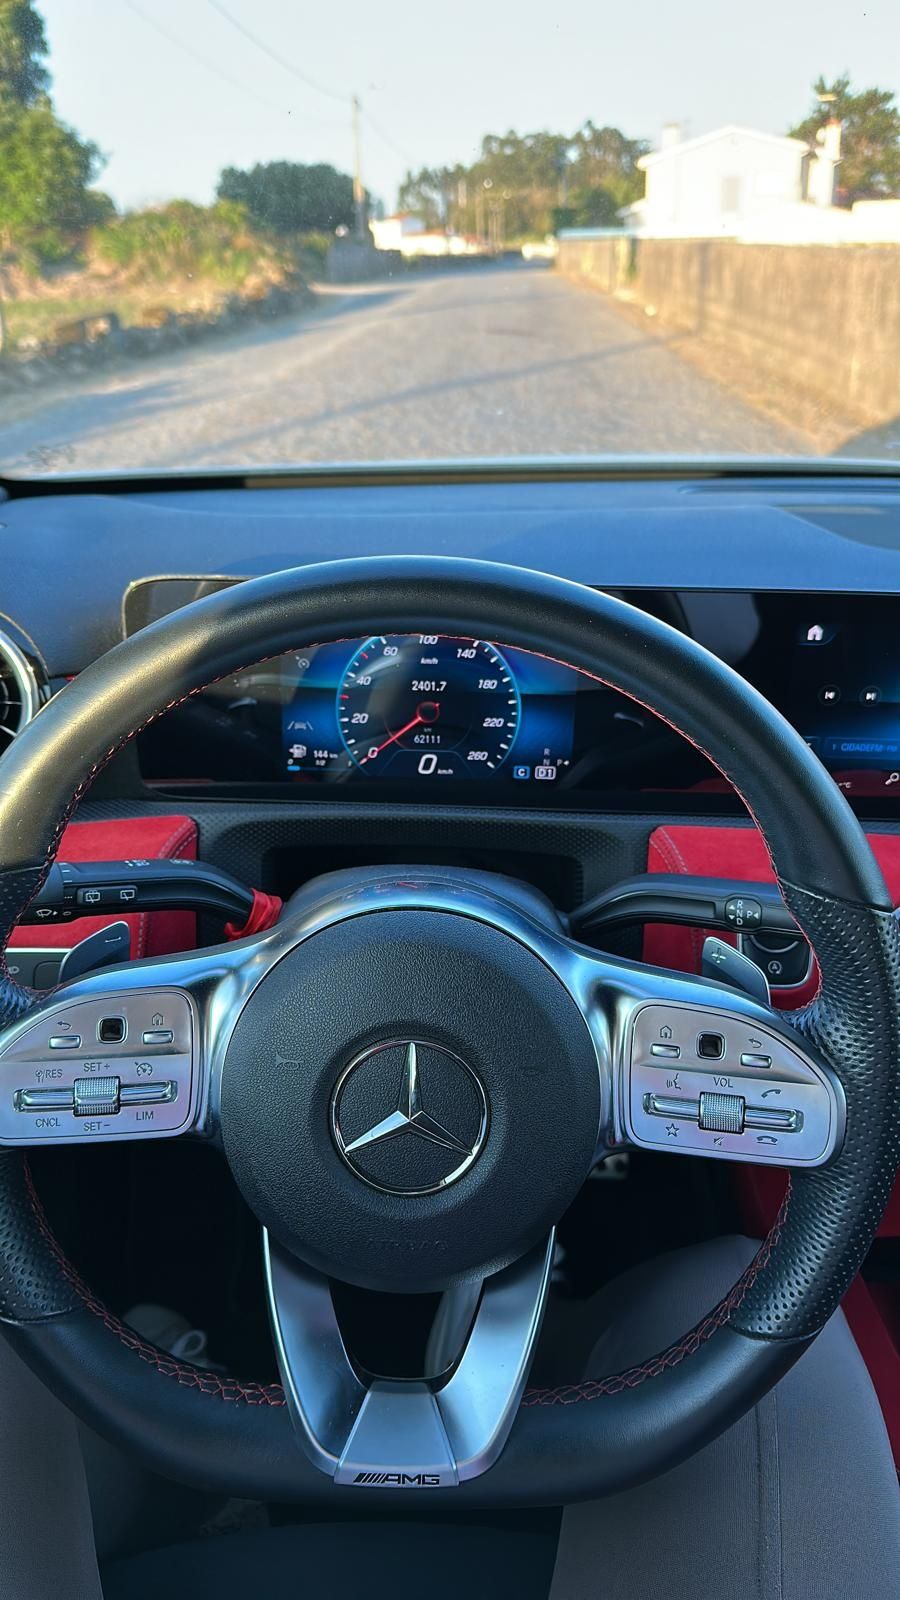 Display Mercedes-Benz/Visor mbux